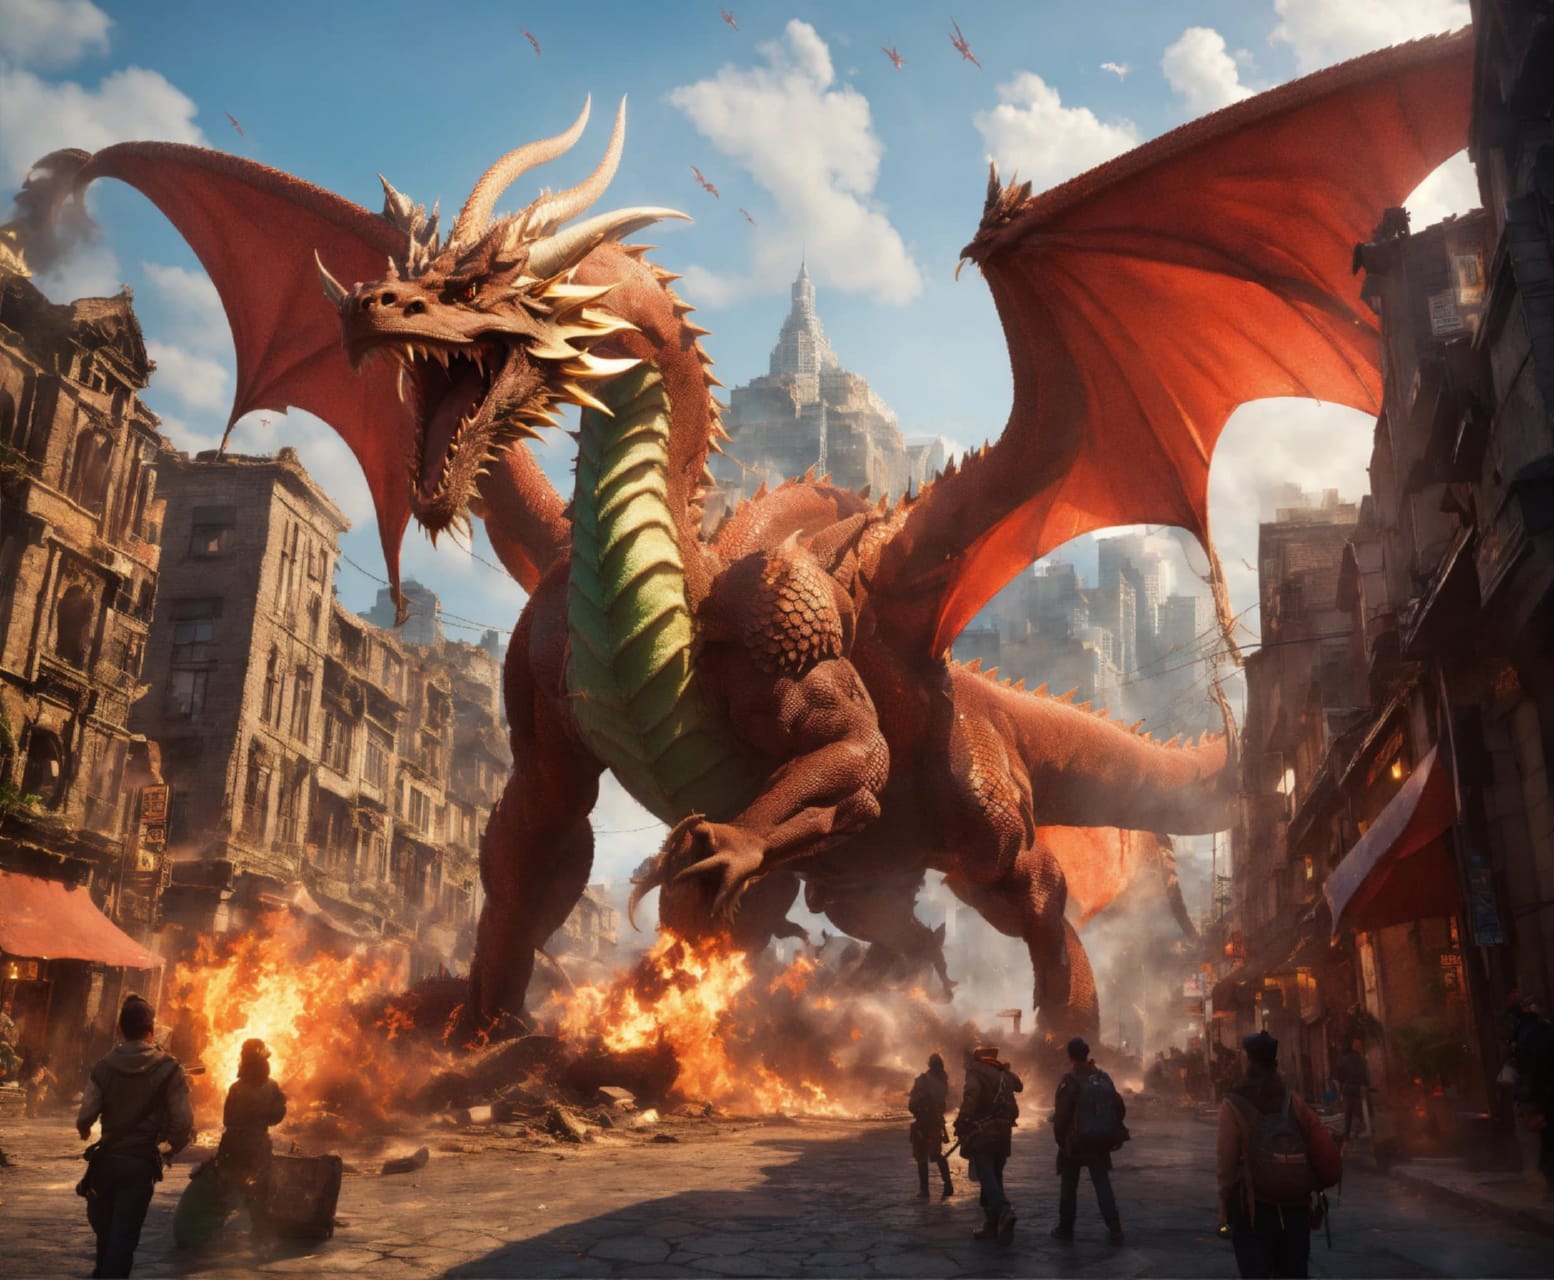 Мистический дракон вдохновляет на исследование тайн и загадок